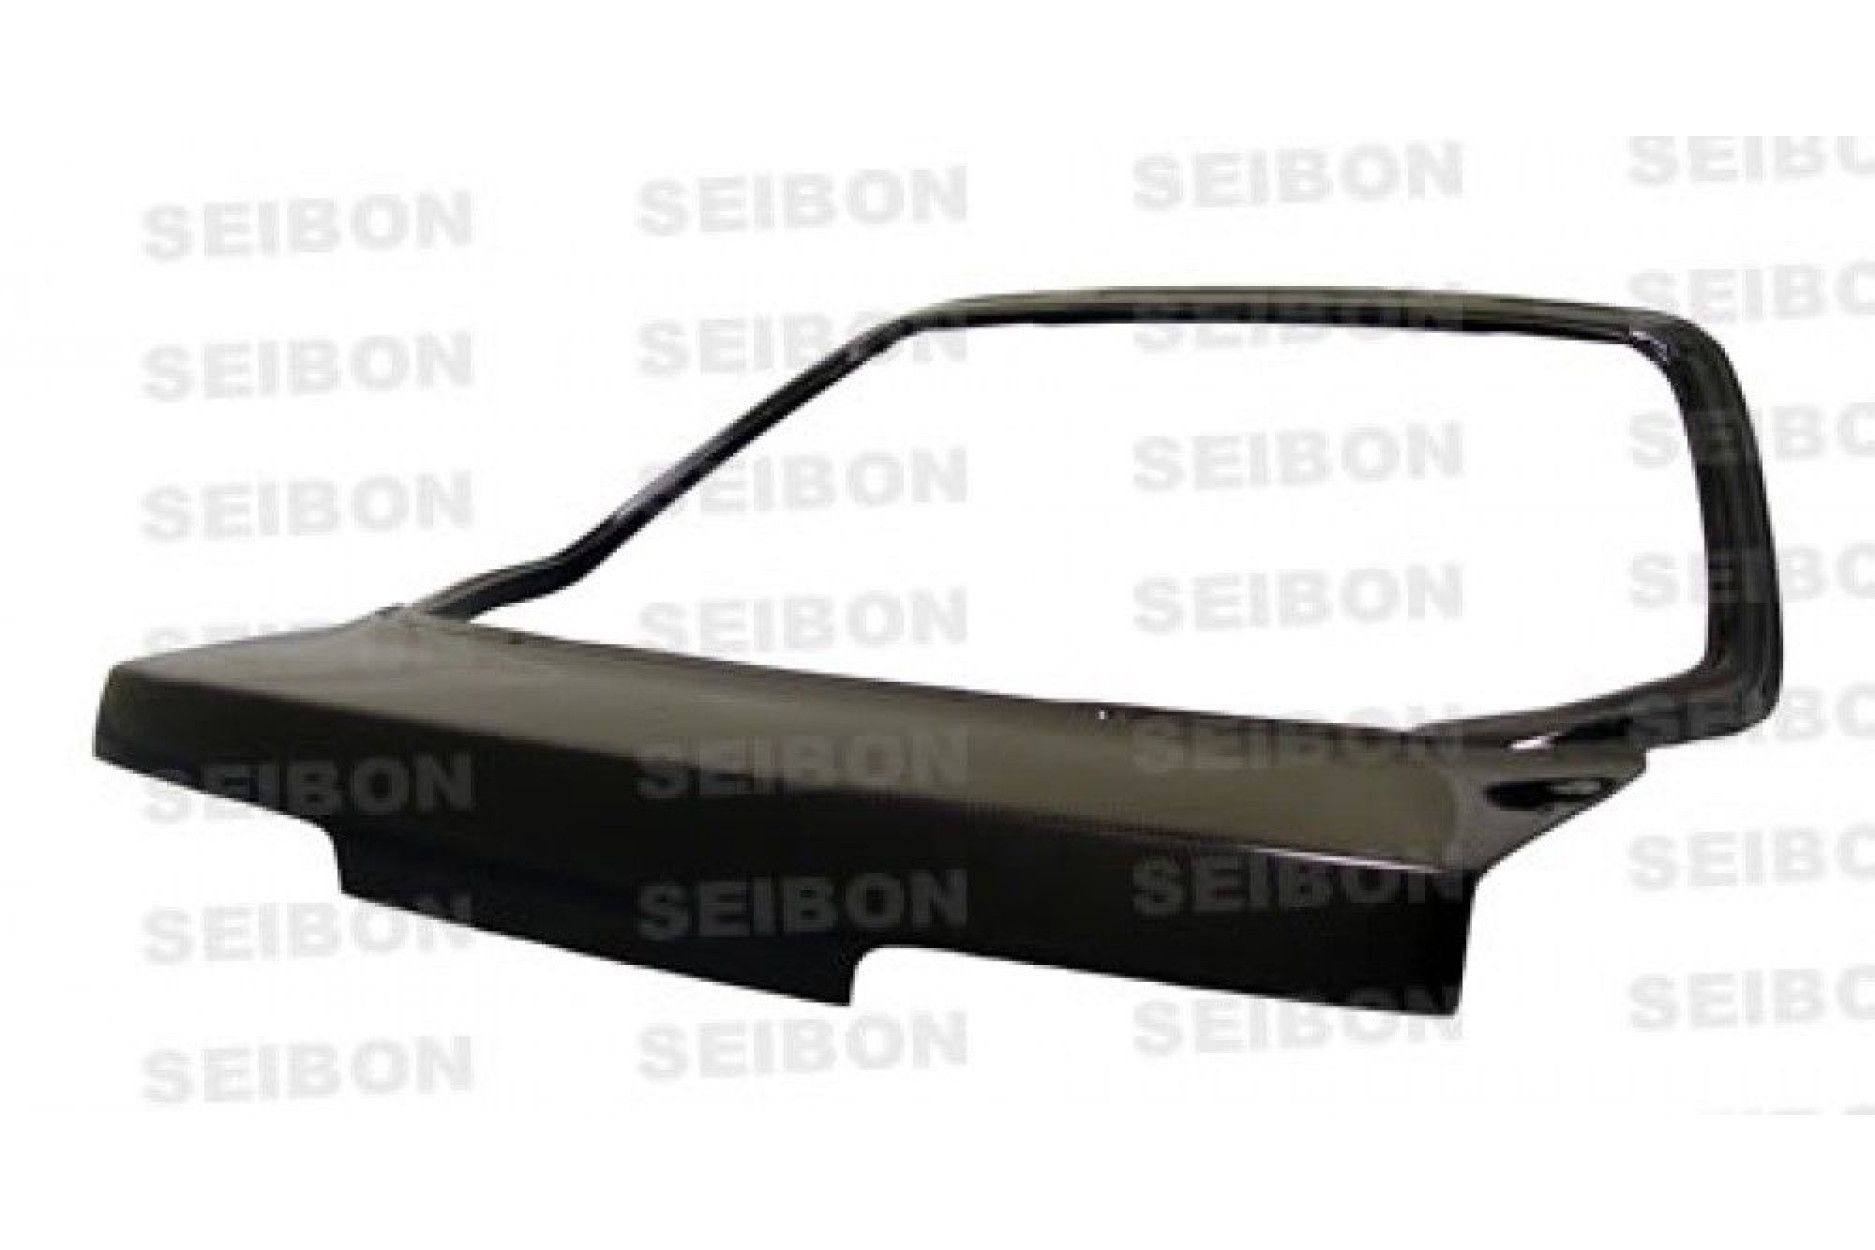 Seibon carbon TRUNK for ACURA INTEGRA 2DR 1990 - 1993 OE-style